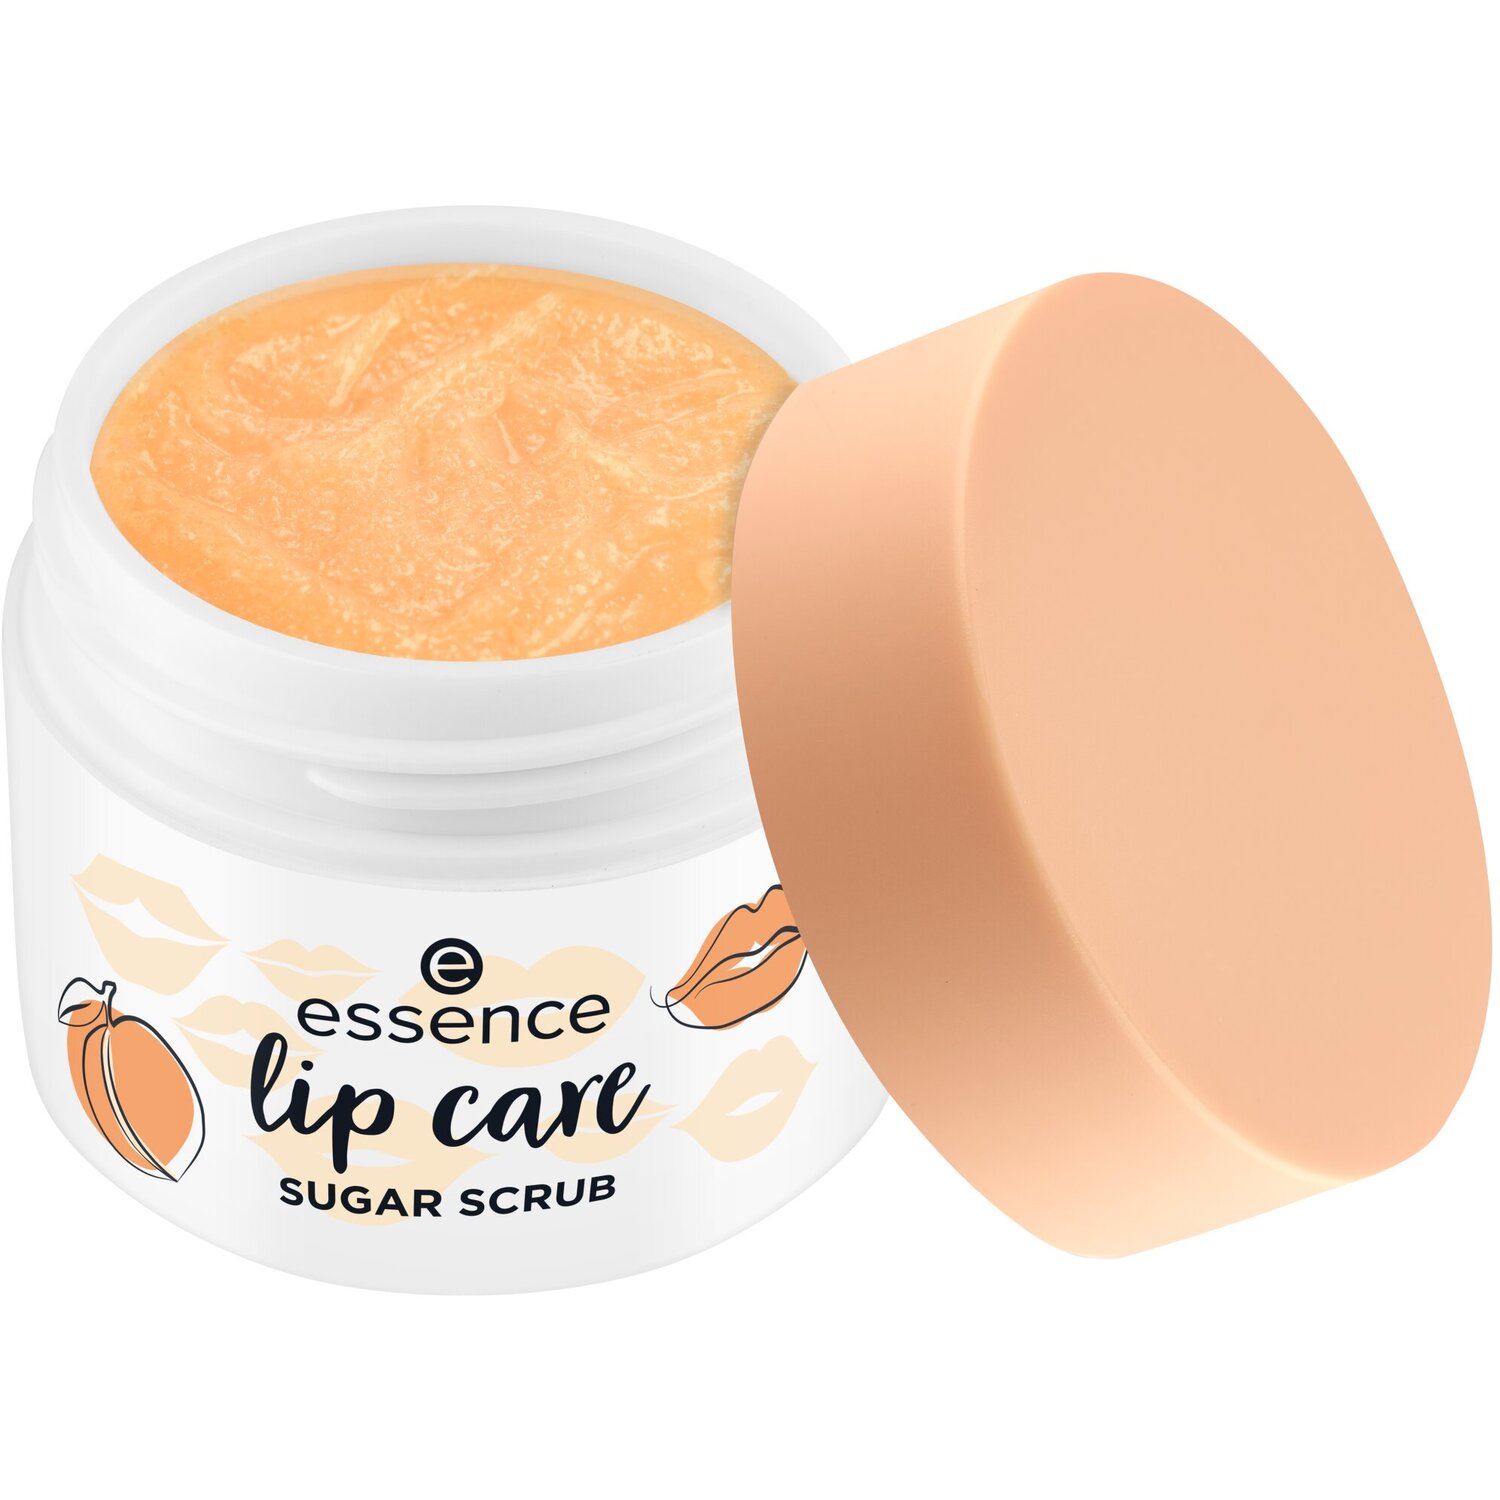 essence Lip Care Sugar Scrub - Orange Image